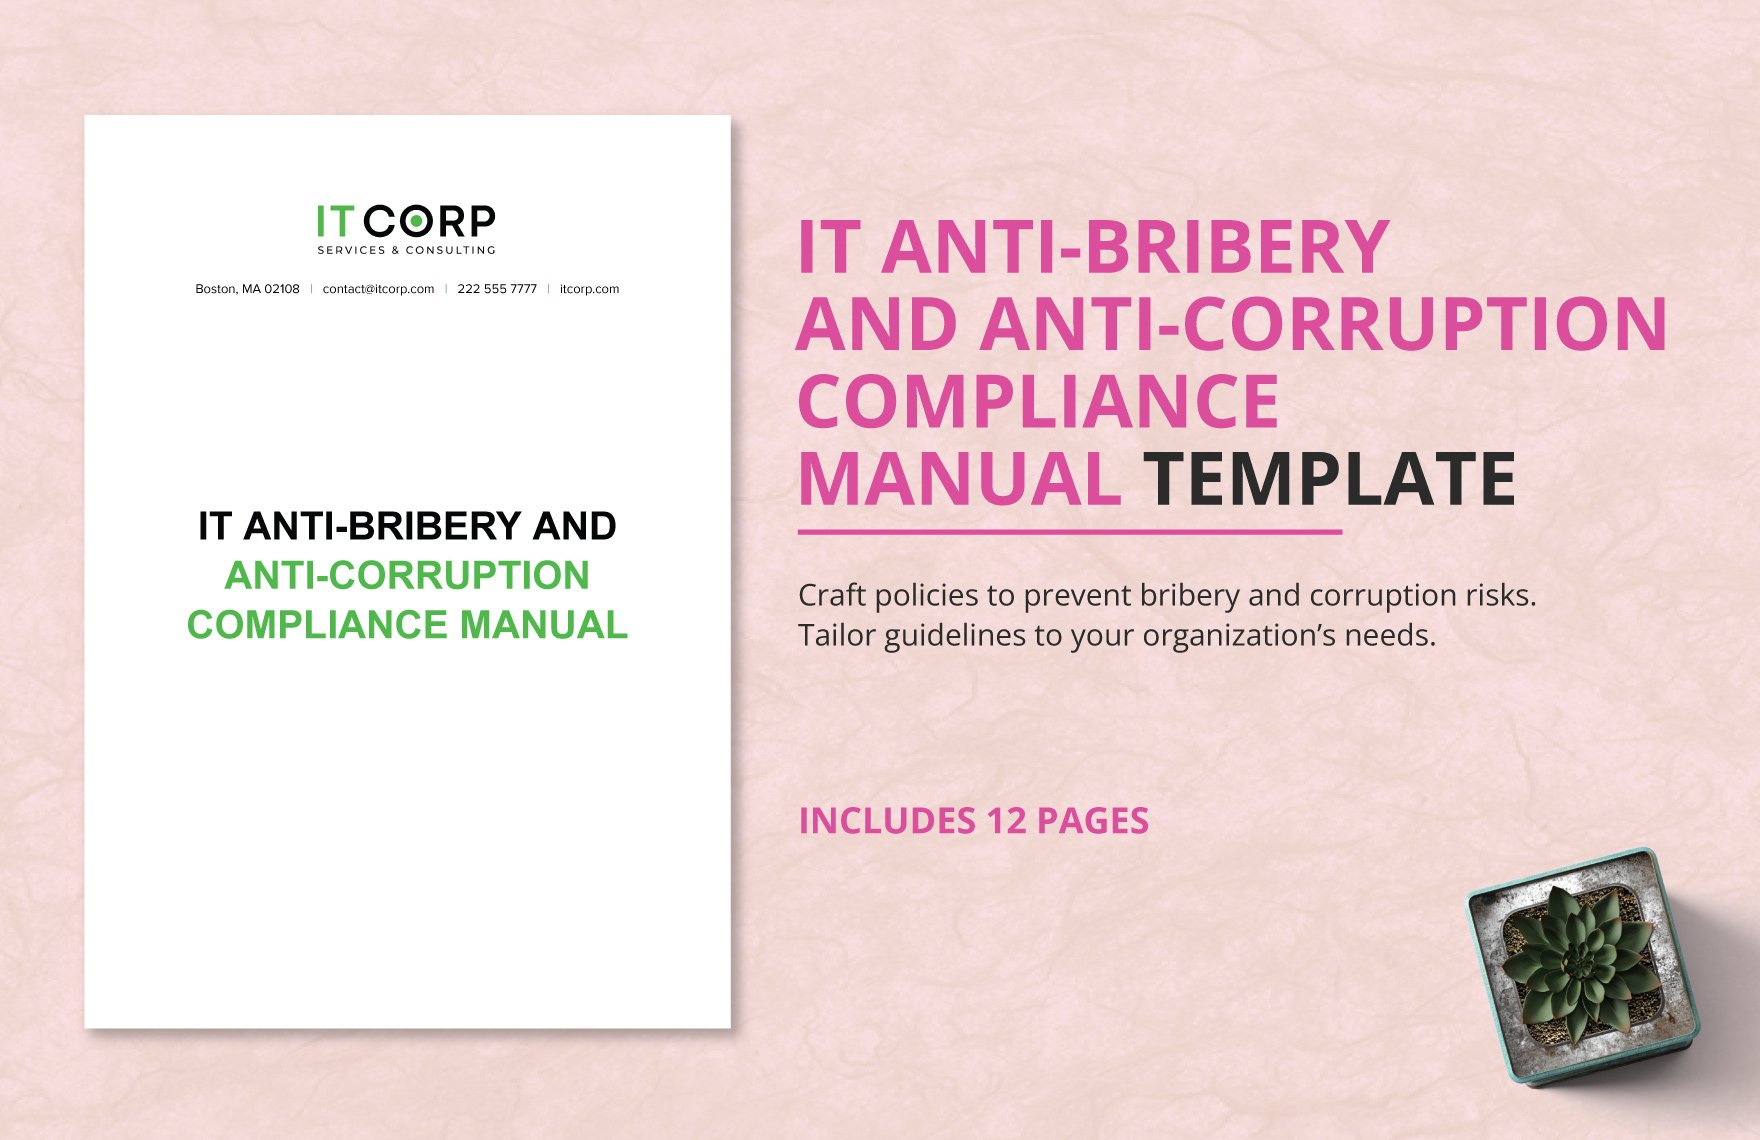 IT Anti-Bribery and Anti-Corruption Compliance Manual Template